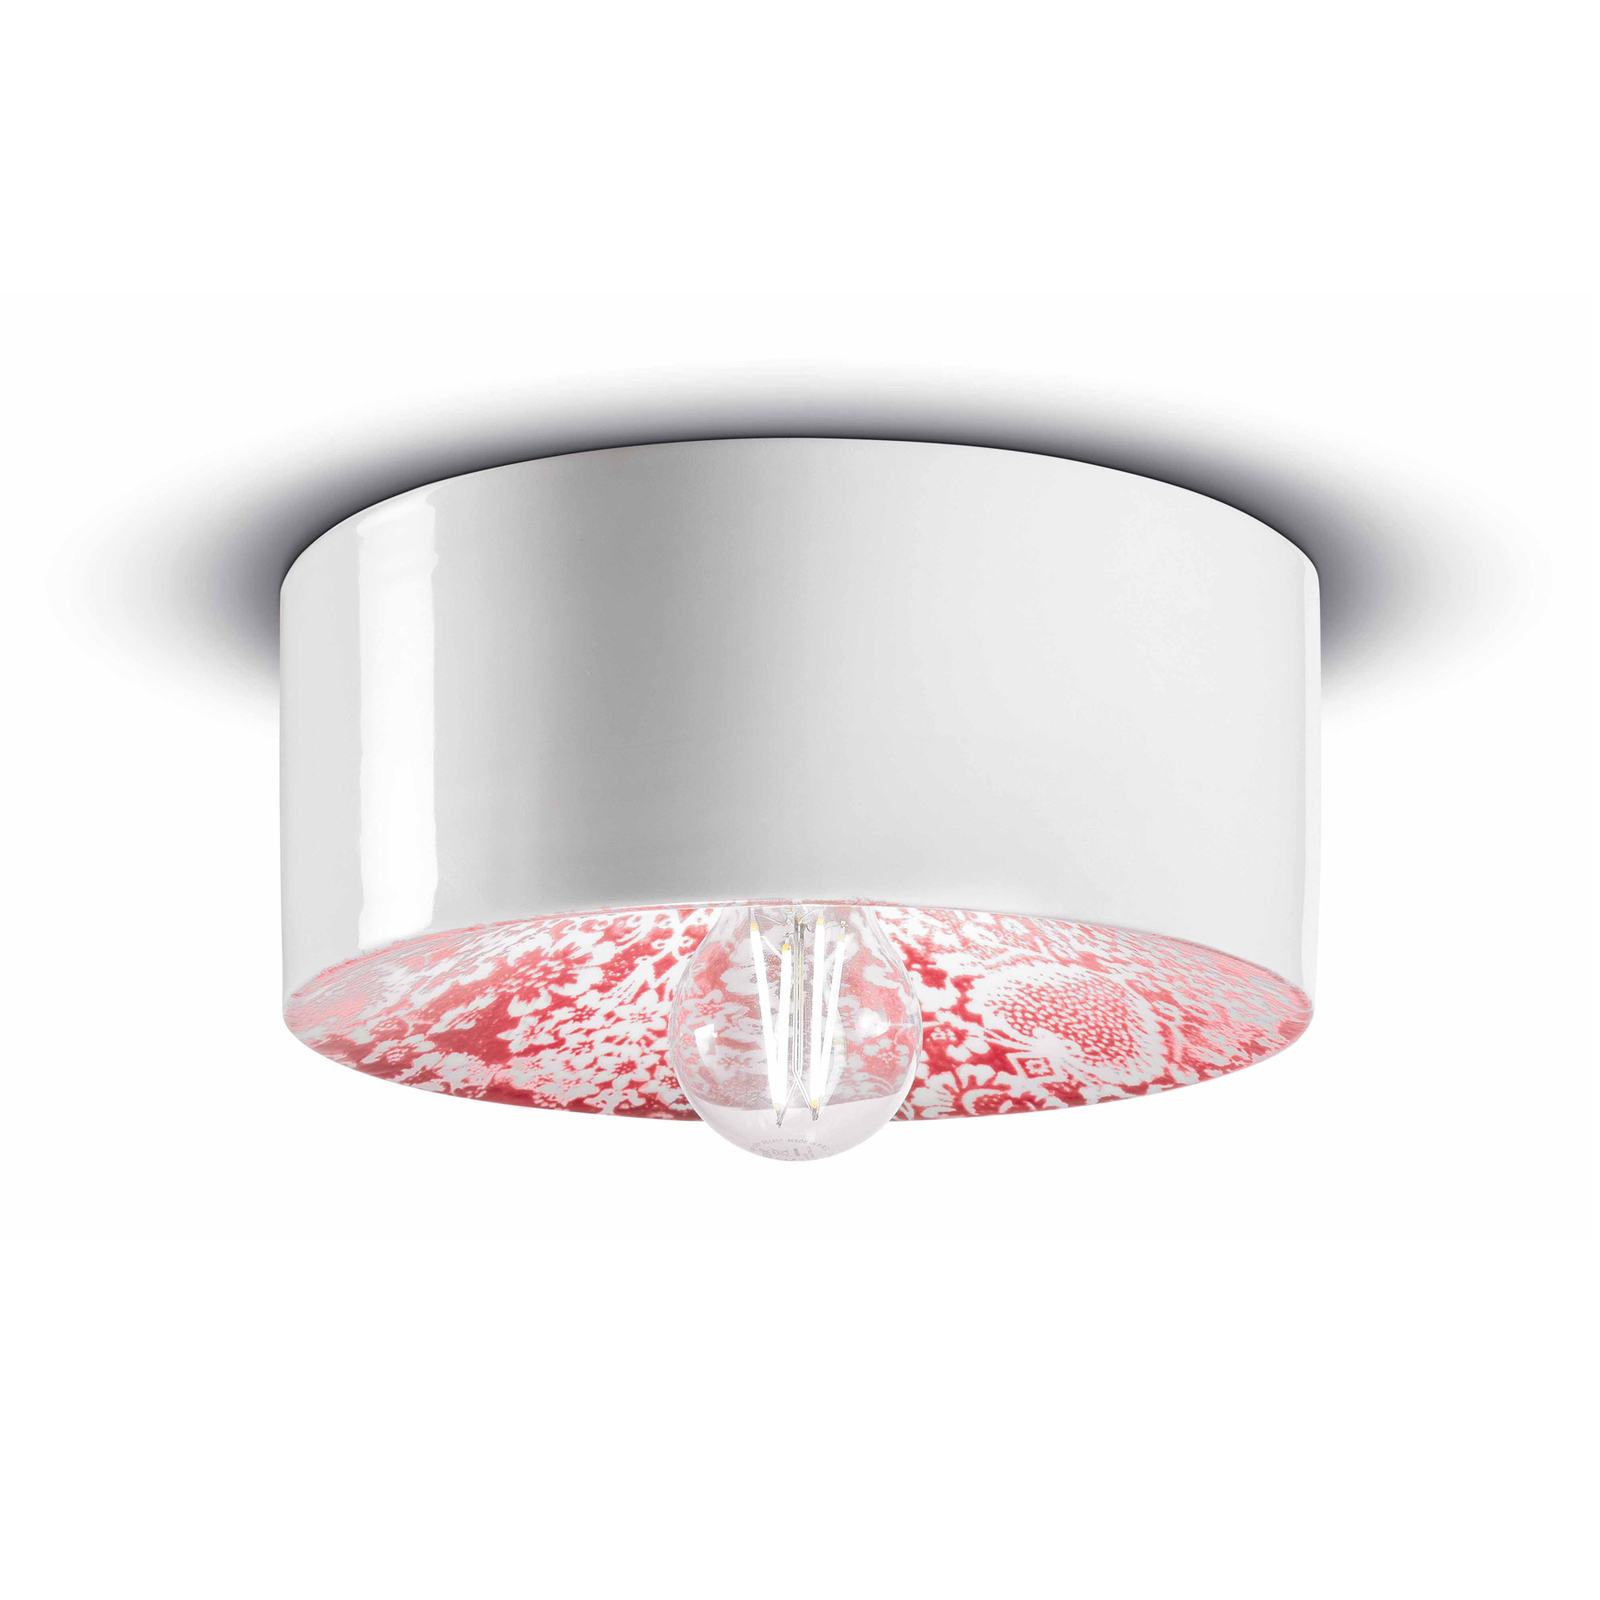 PI ceiling light, floral pattern Ø 25 cm red/white